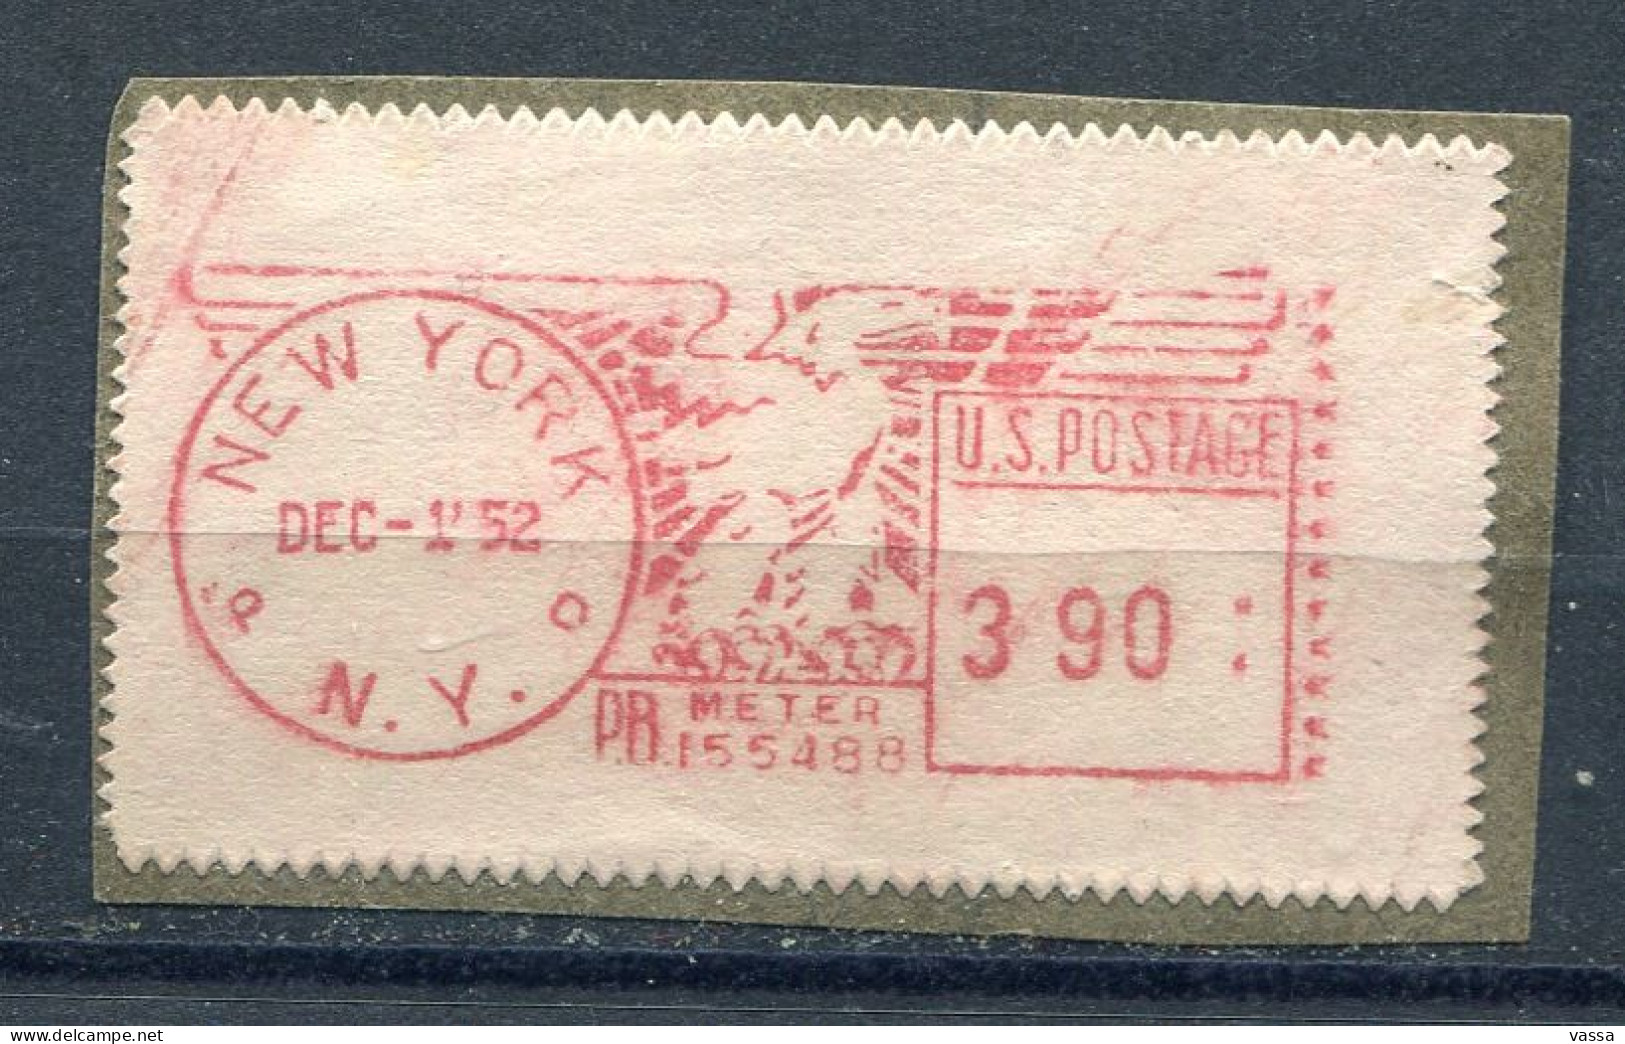 USA -1952 - PB Meter N°155488 PB - New-York  / Fragment- Aigle - Used Stamps